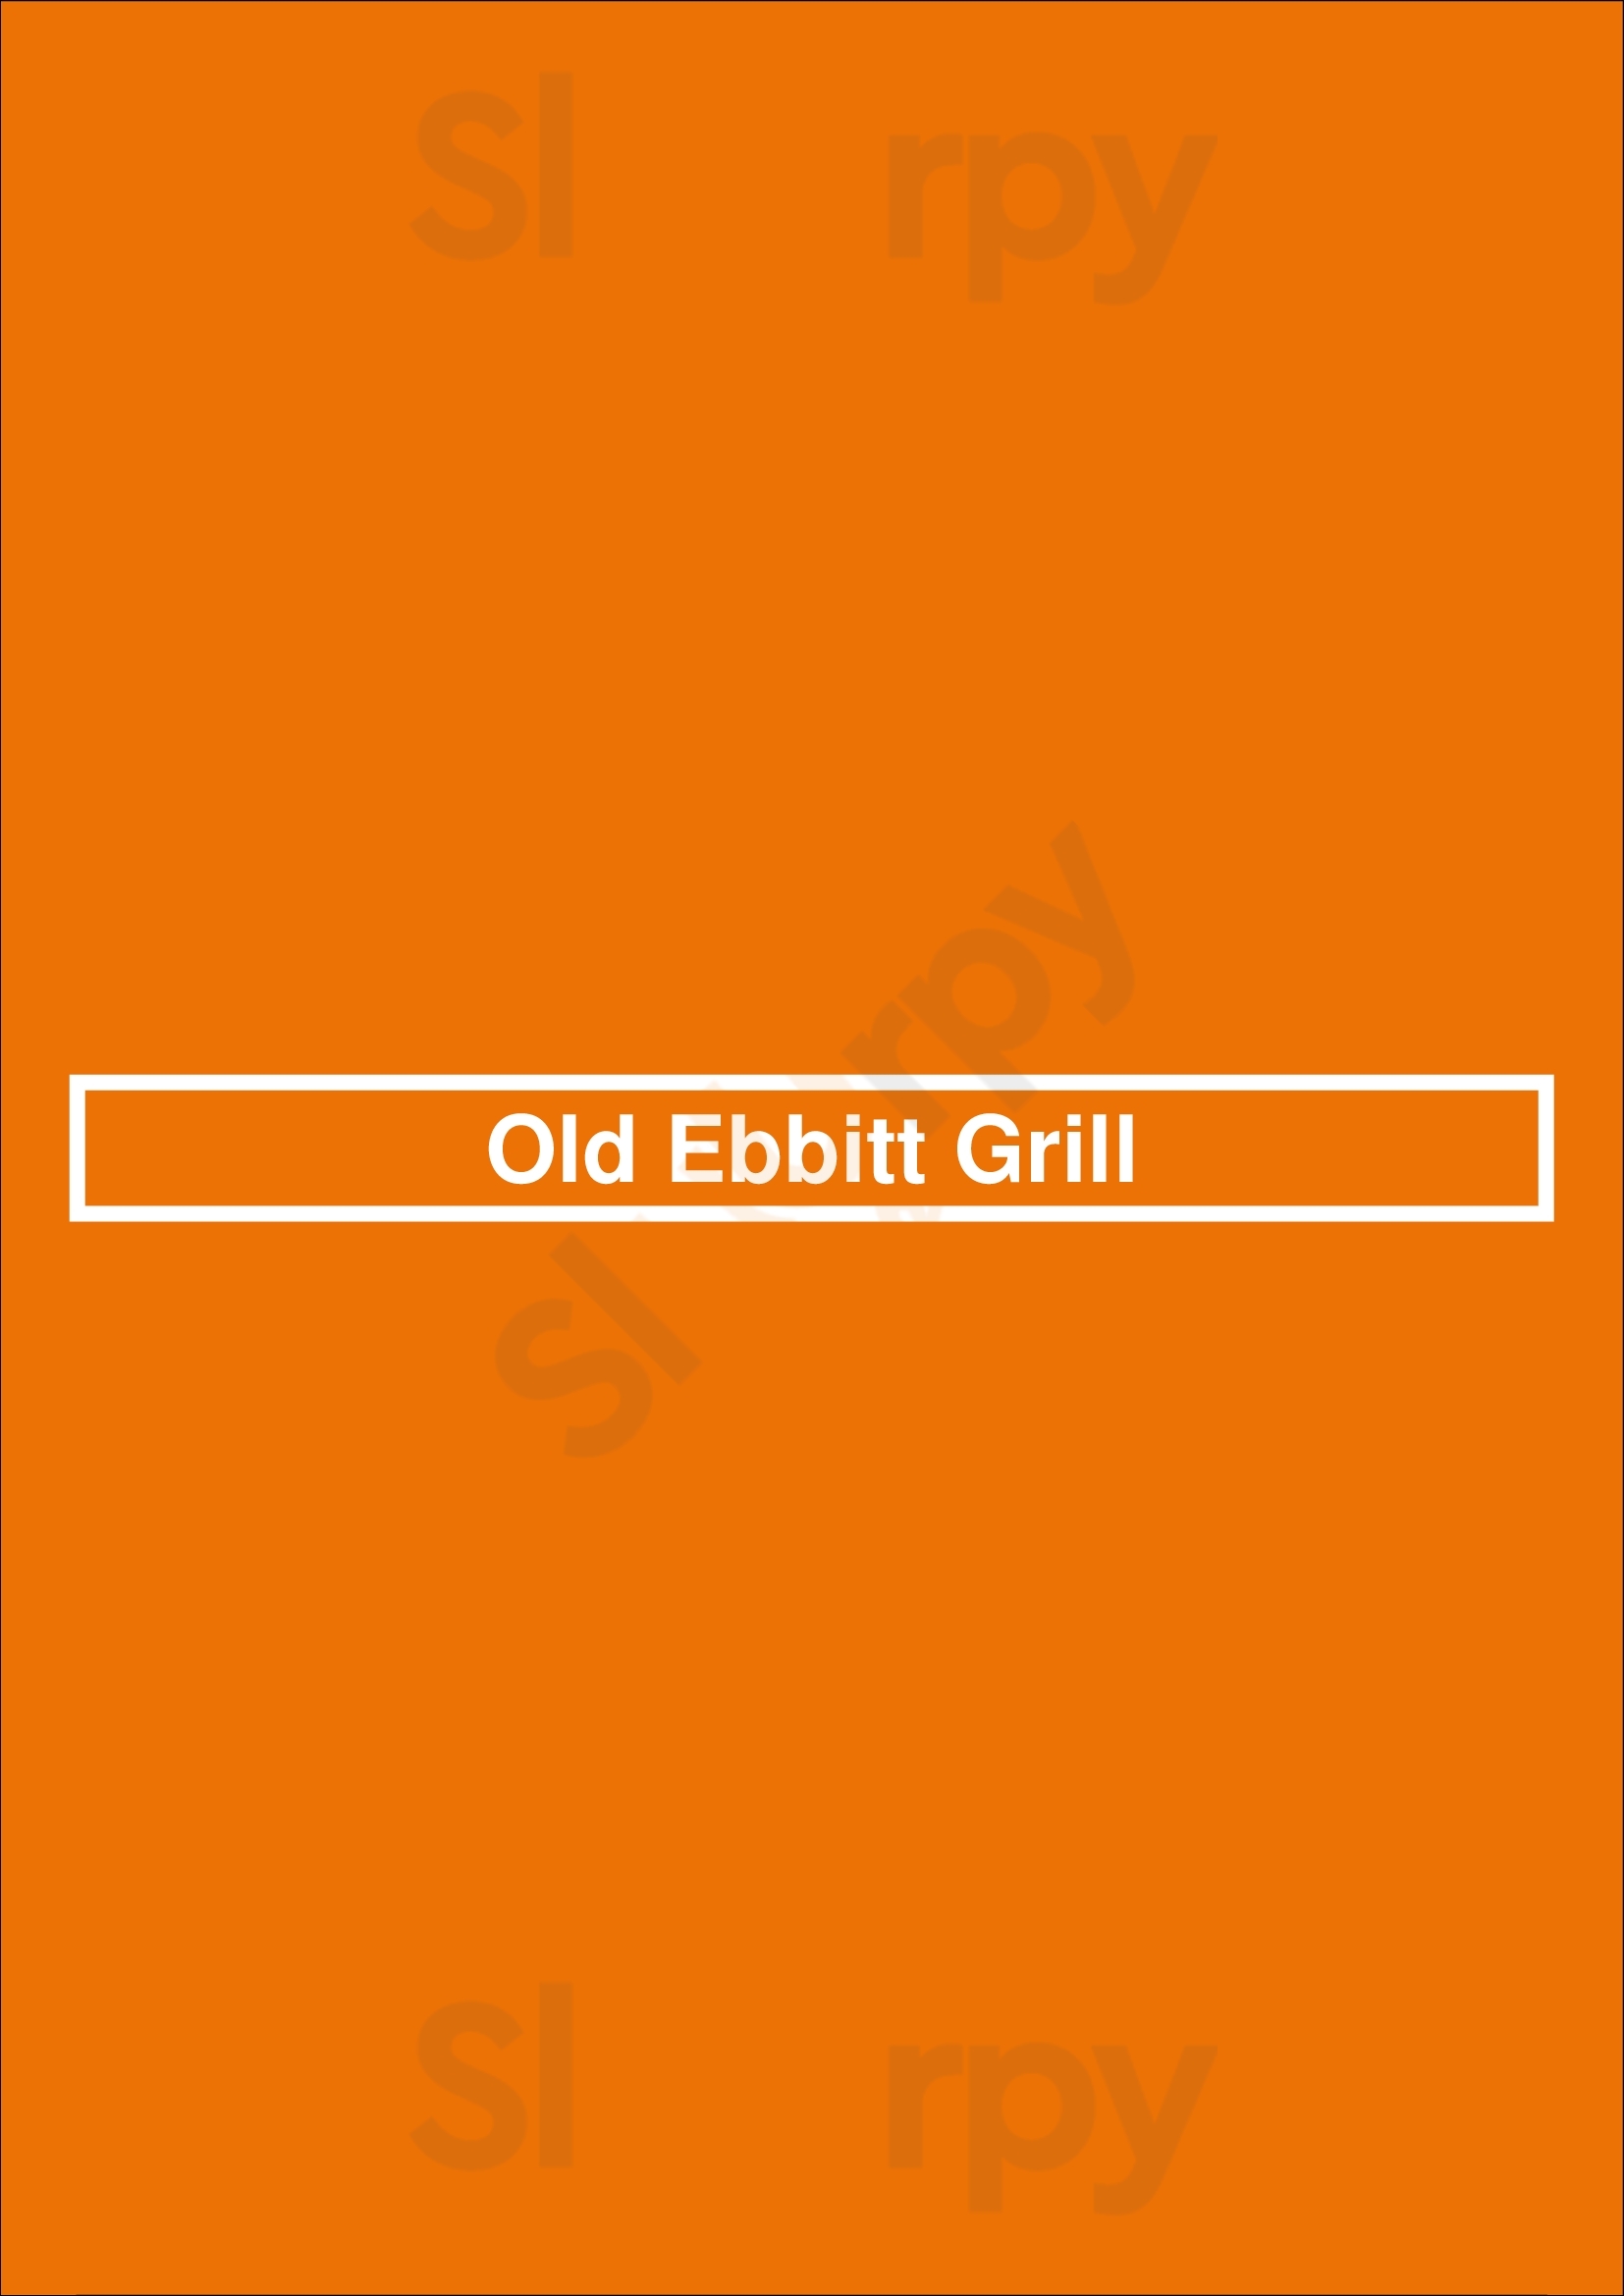 Old Ebbitt Grill Washington DC Menu - 1